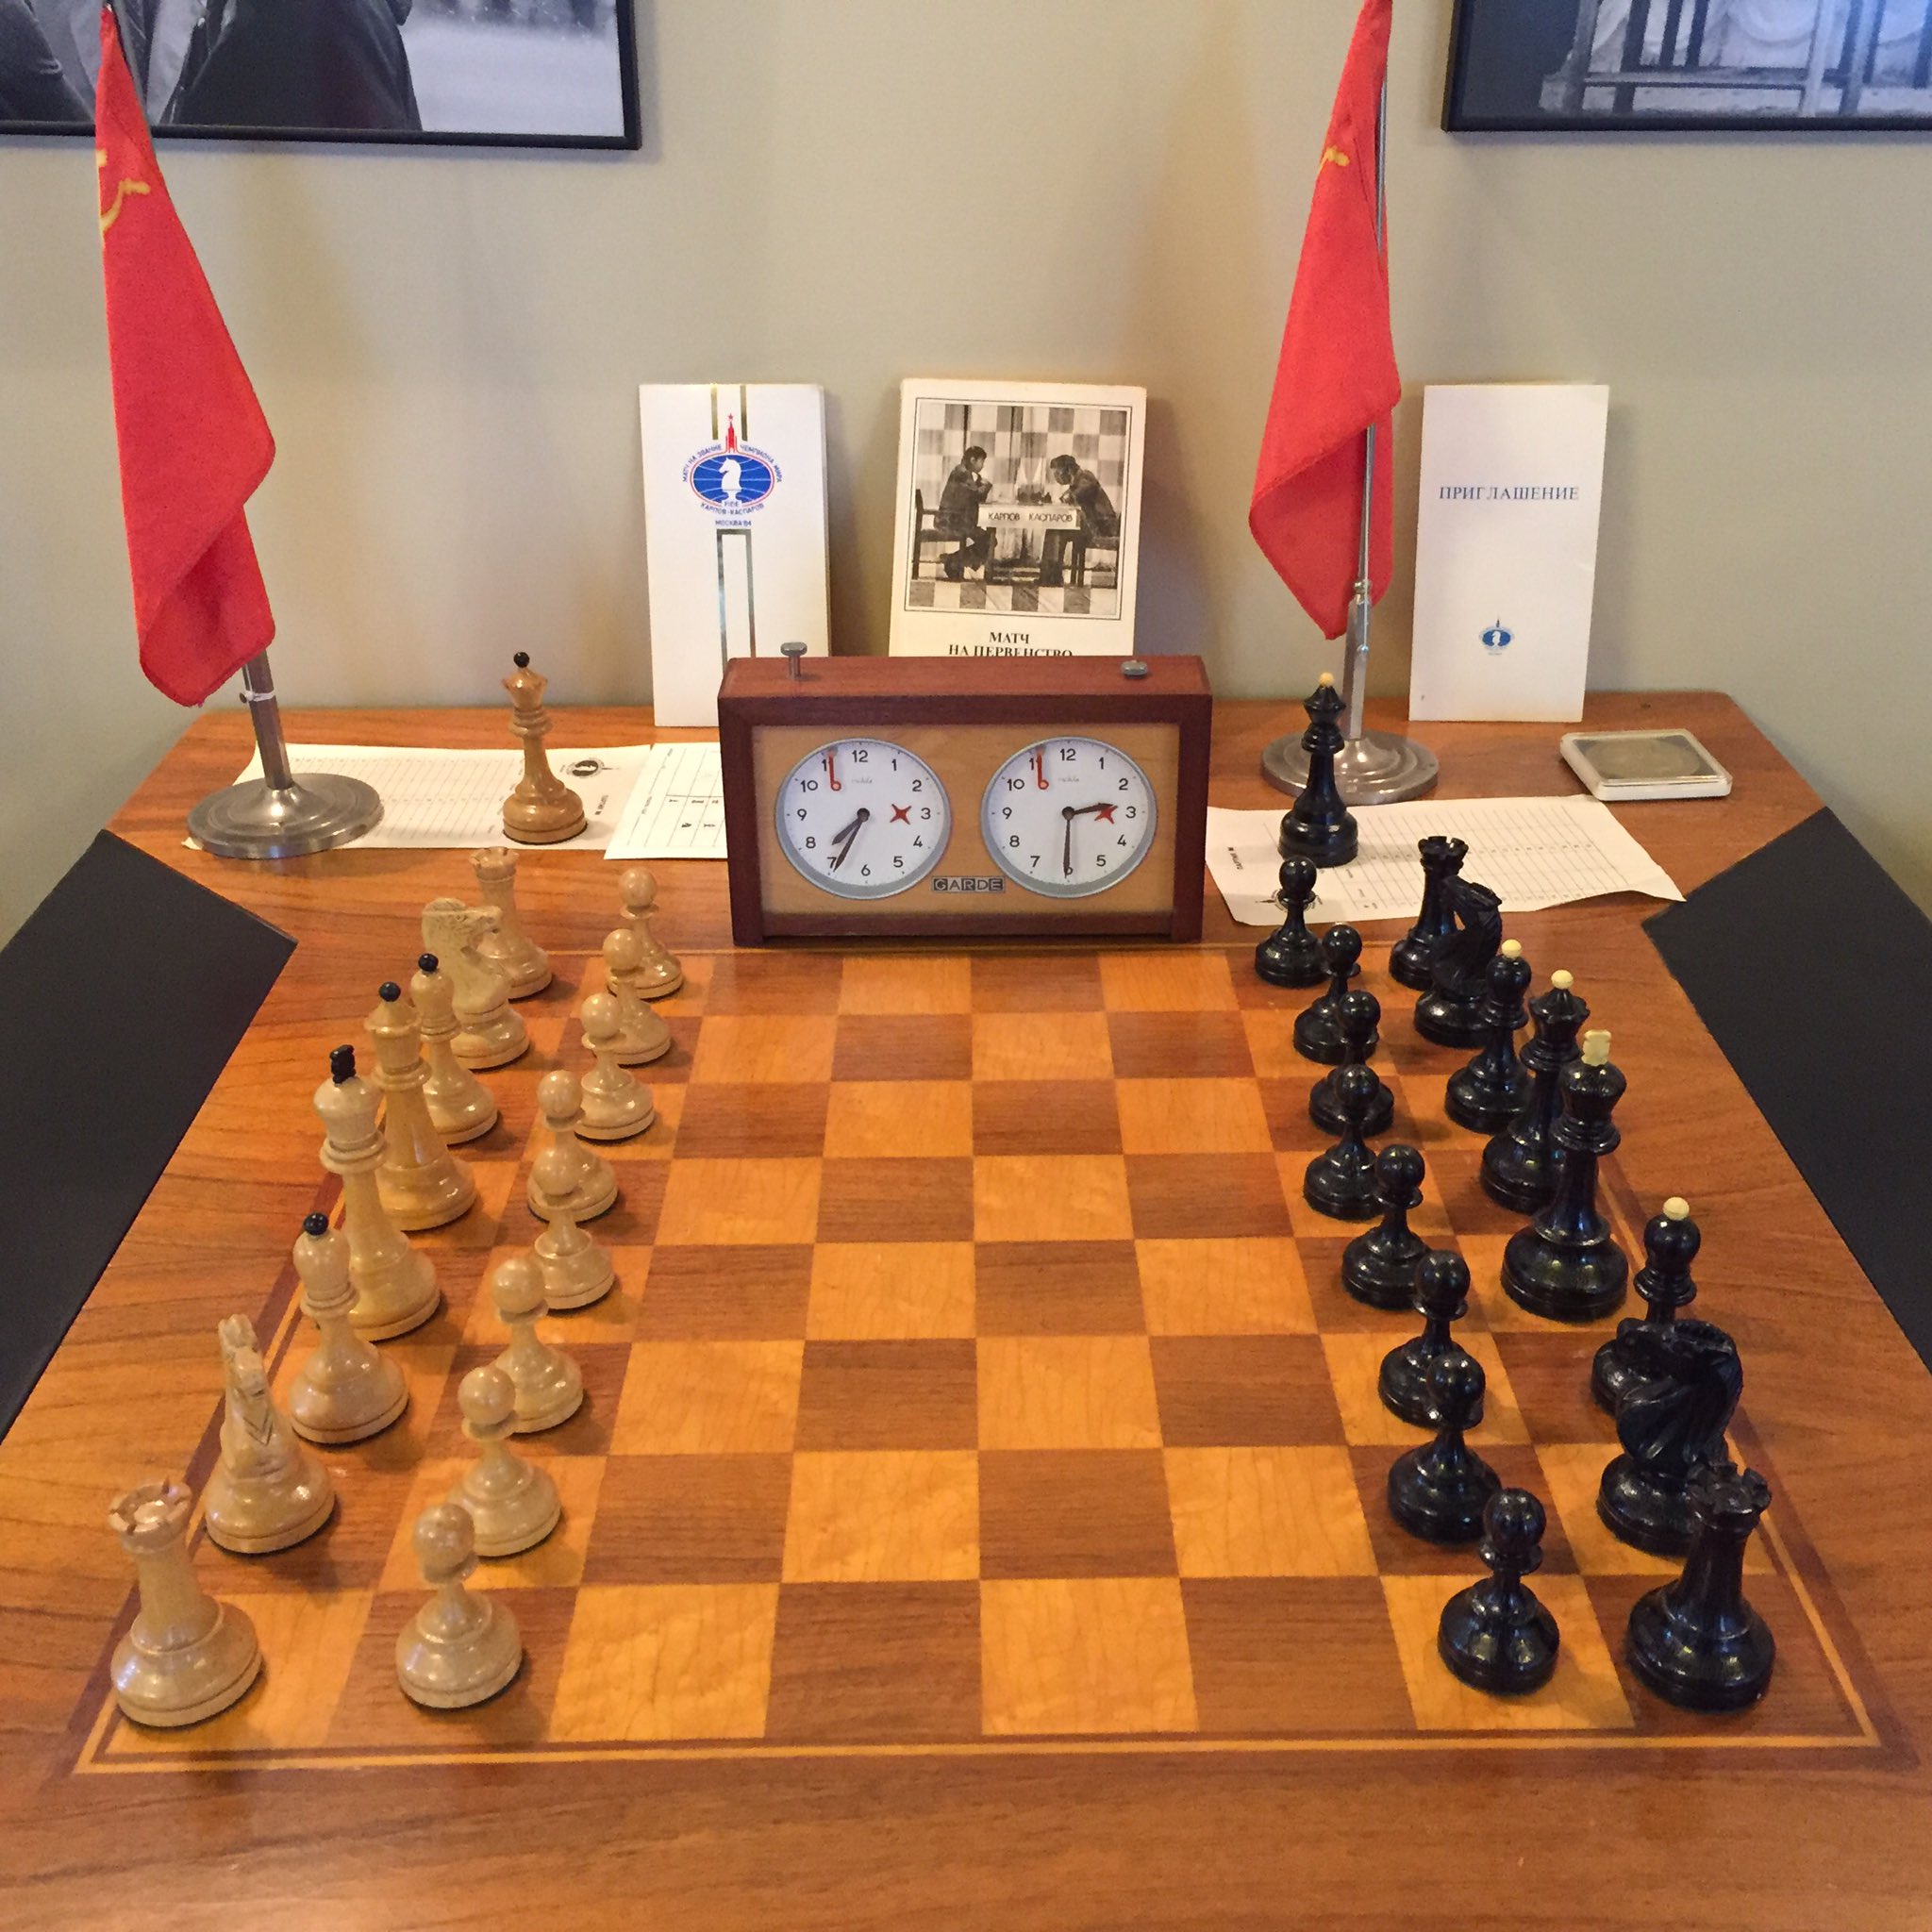 Douglas Griffin on X: The 14th match-game Kasparov-Karpov, World